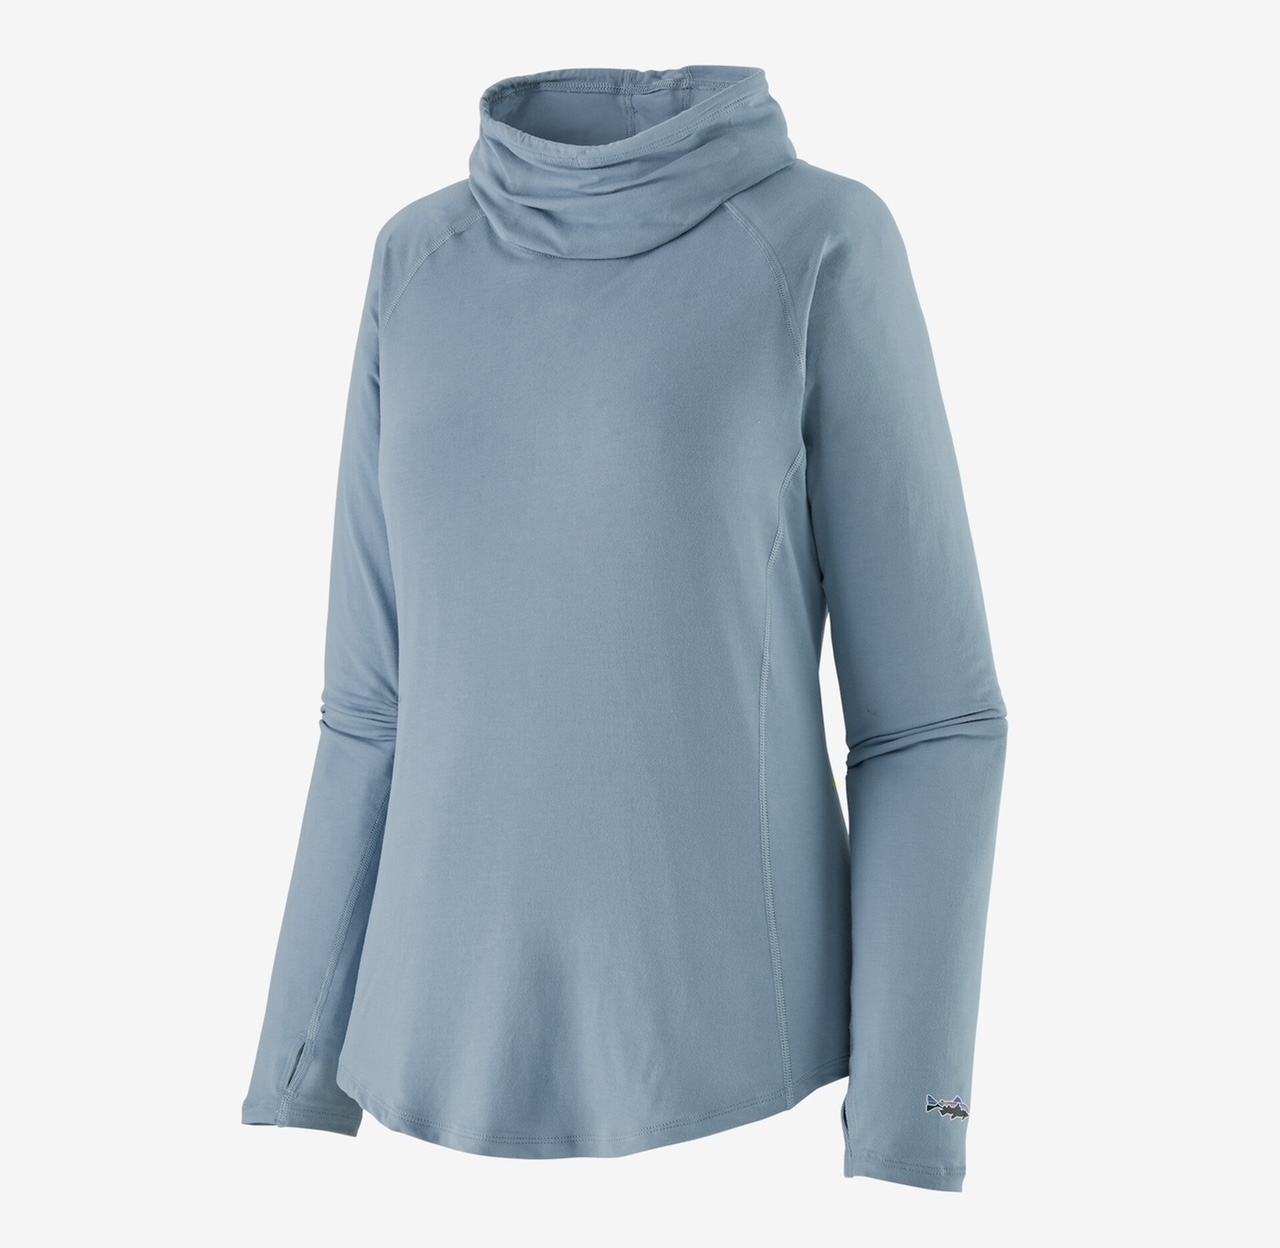 Patagonia W's Tropic Comfort Natural Shirt - Light Plume Grey - Medium